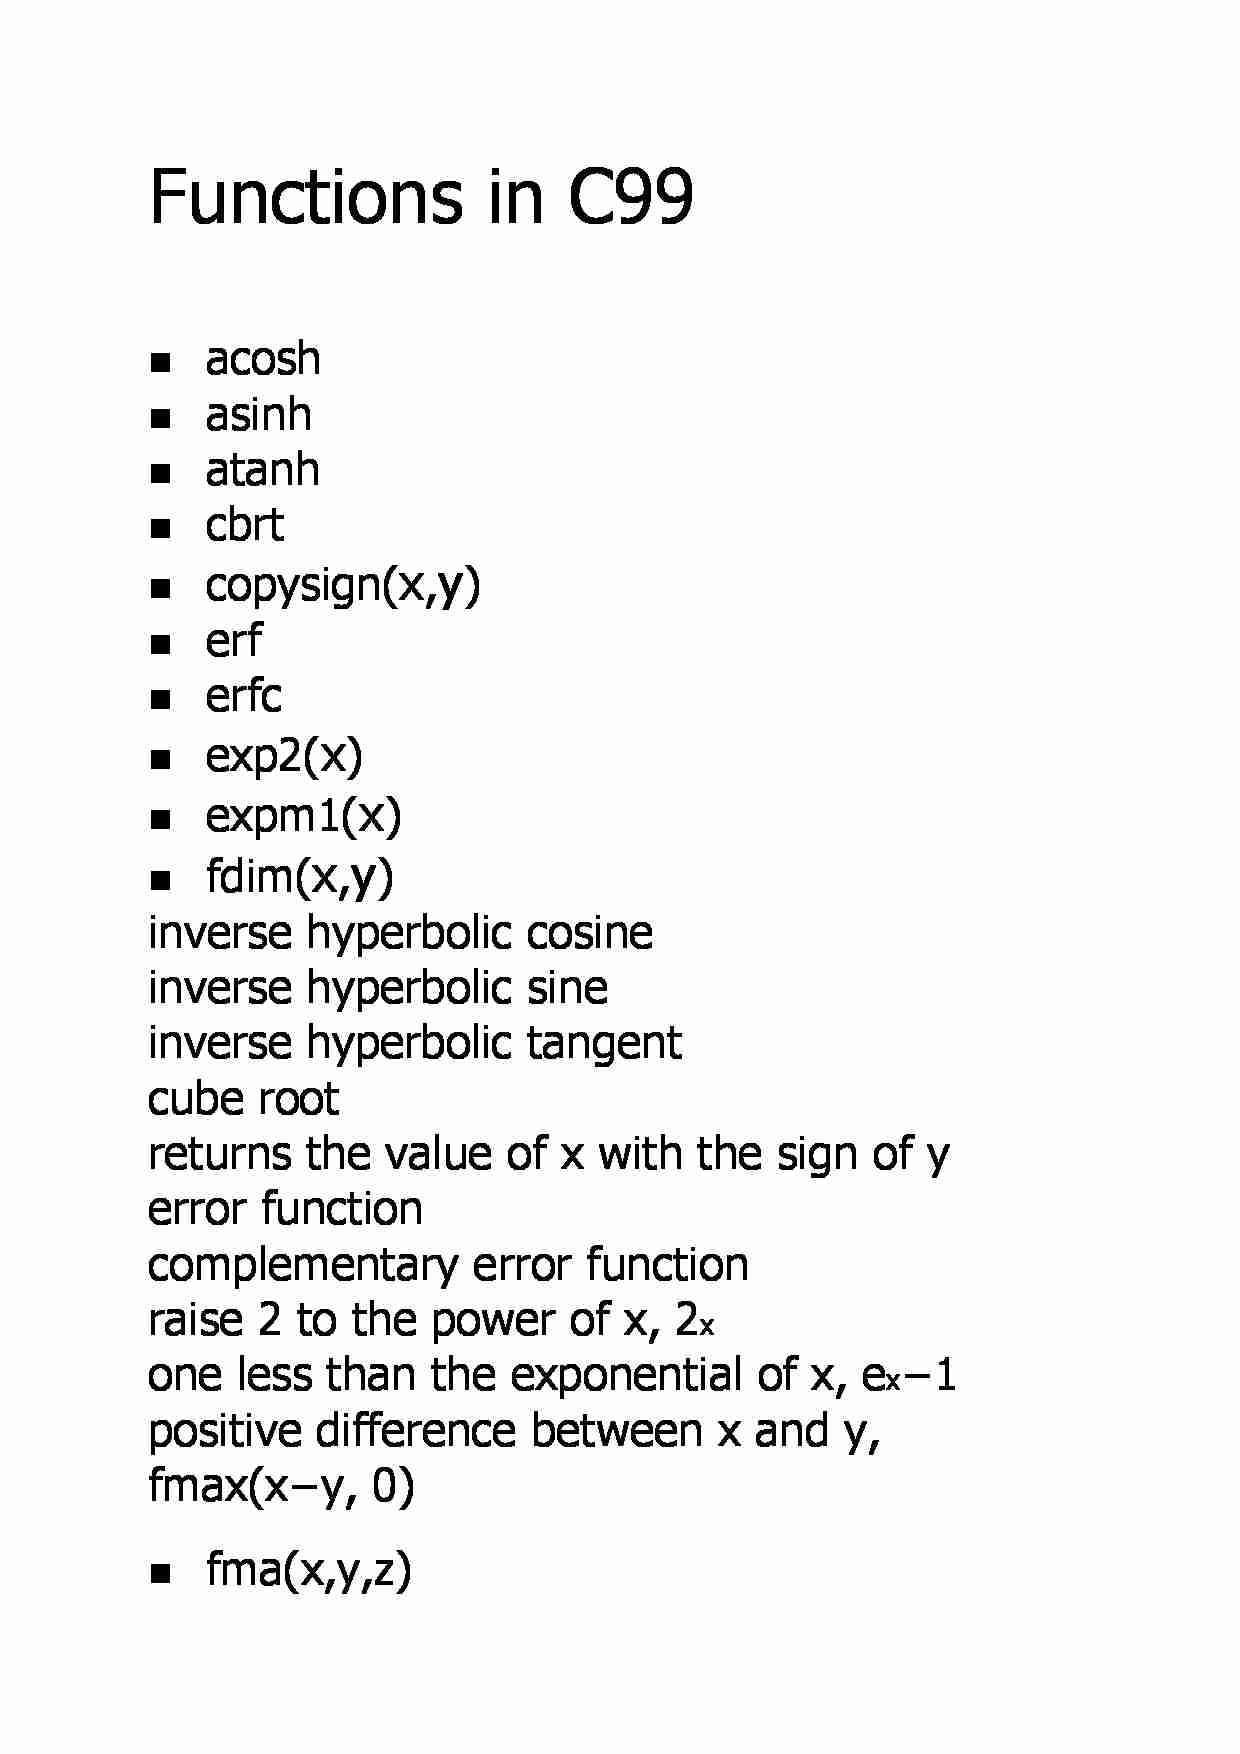 Functions in C99 - strona 1